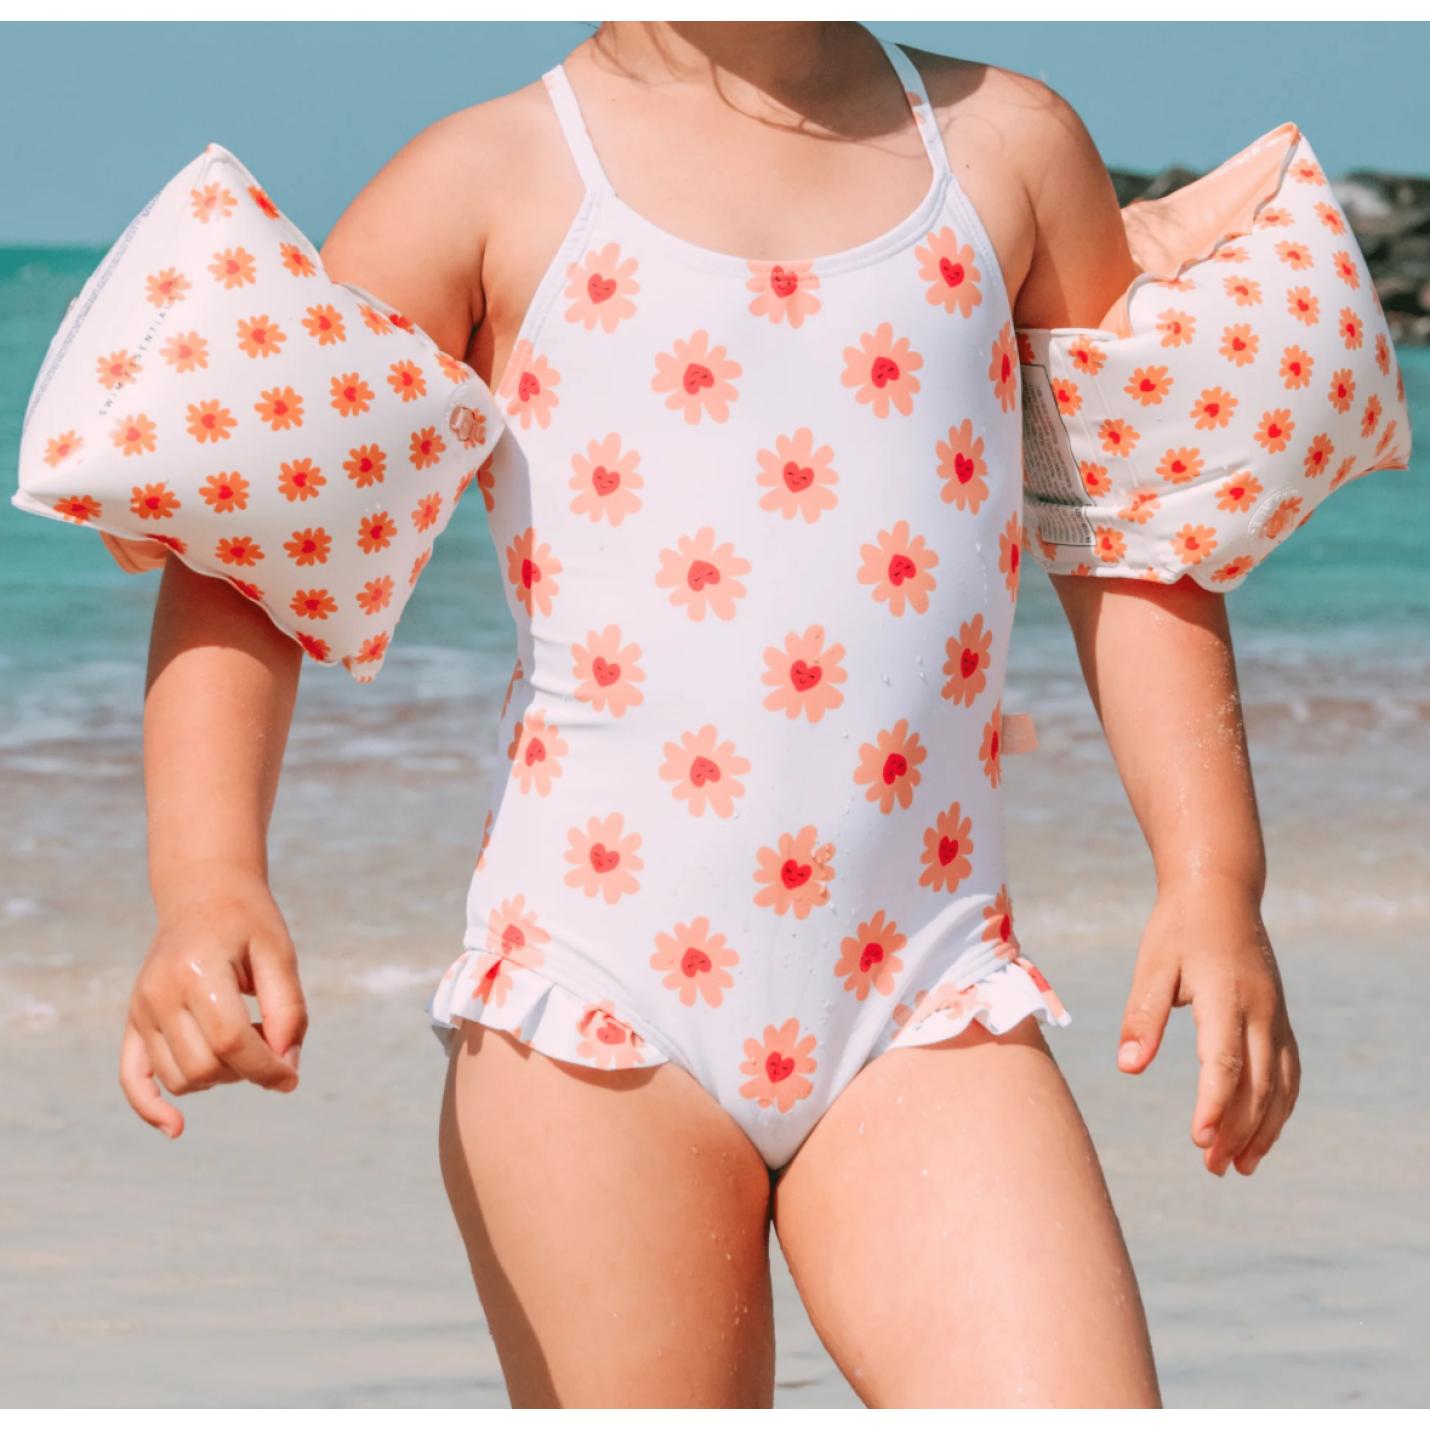 swim essentials strand foto meisje met badpak flower hearts en zwemvleugels